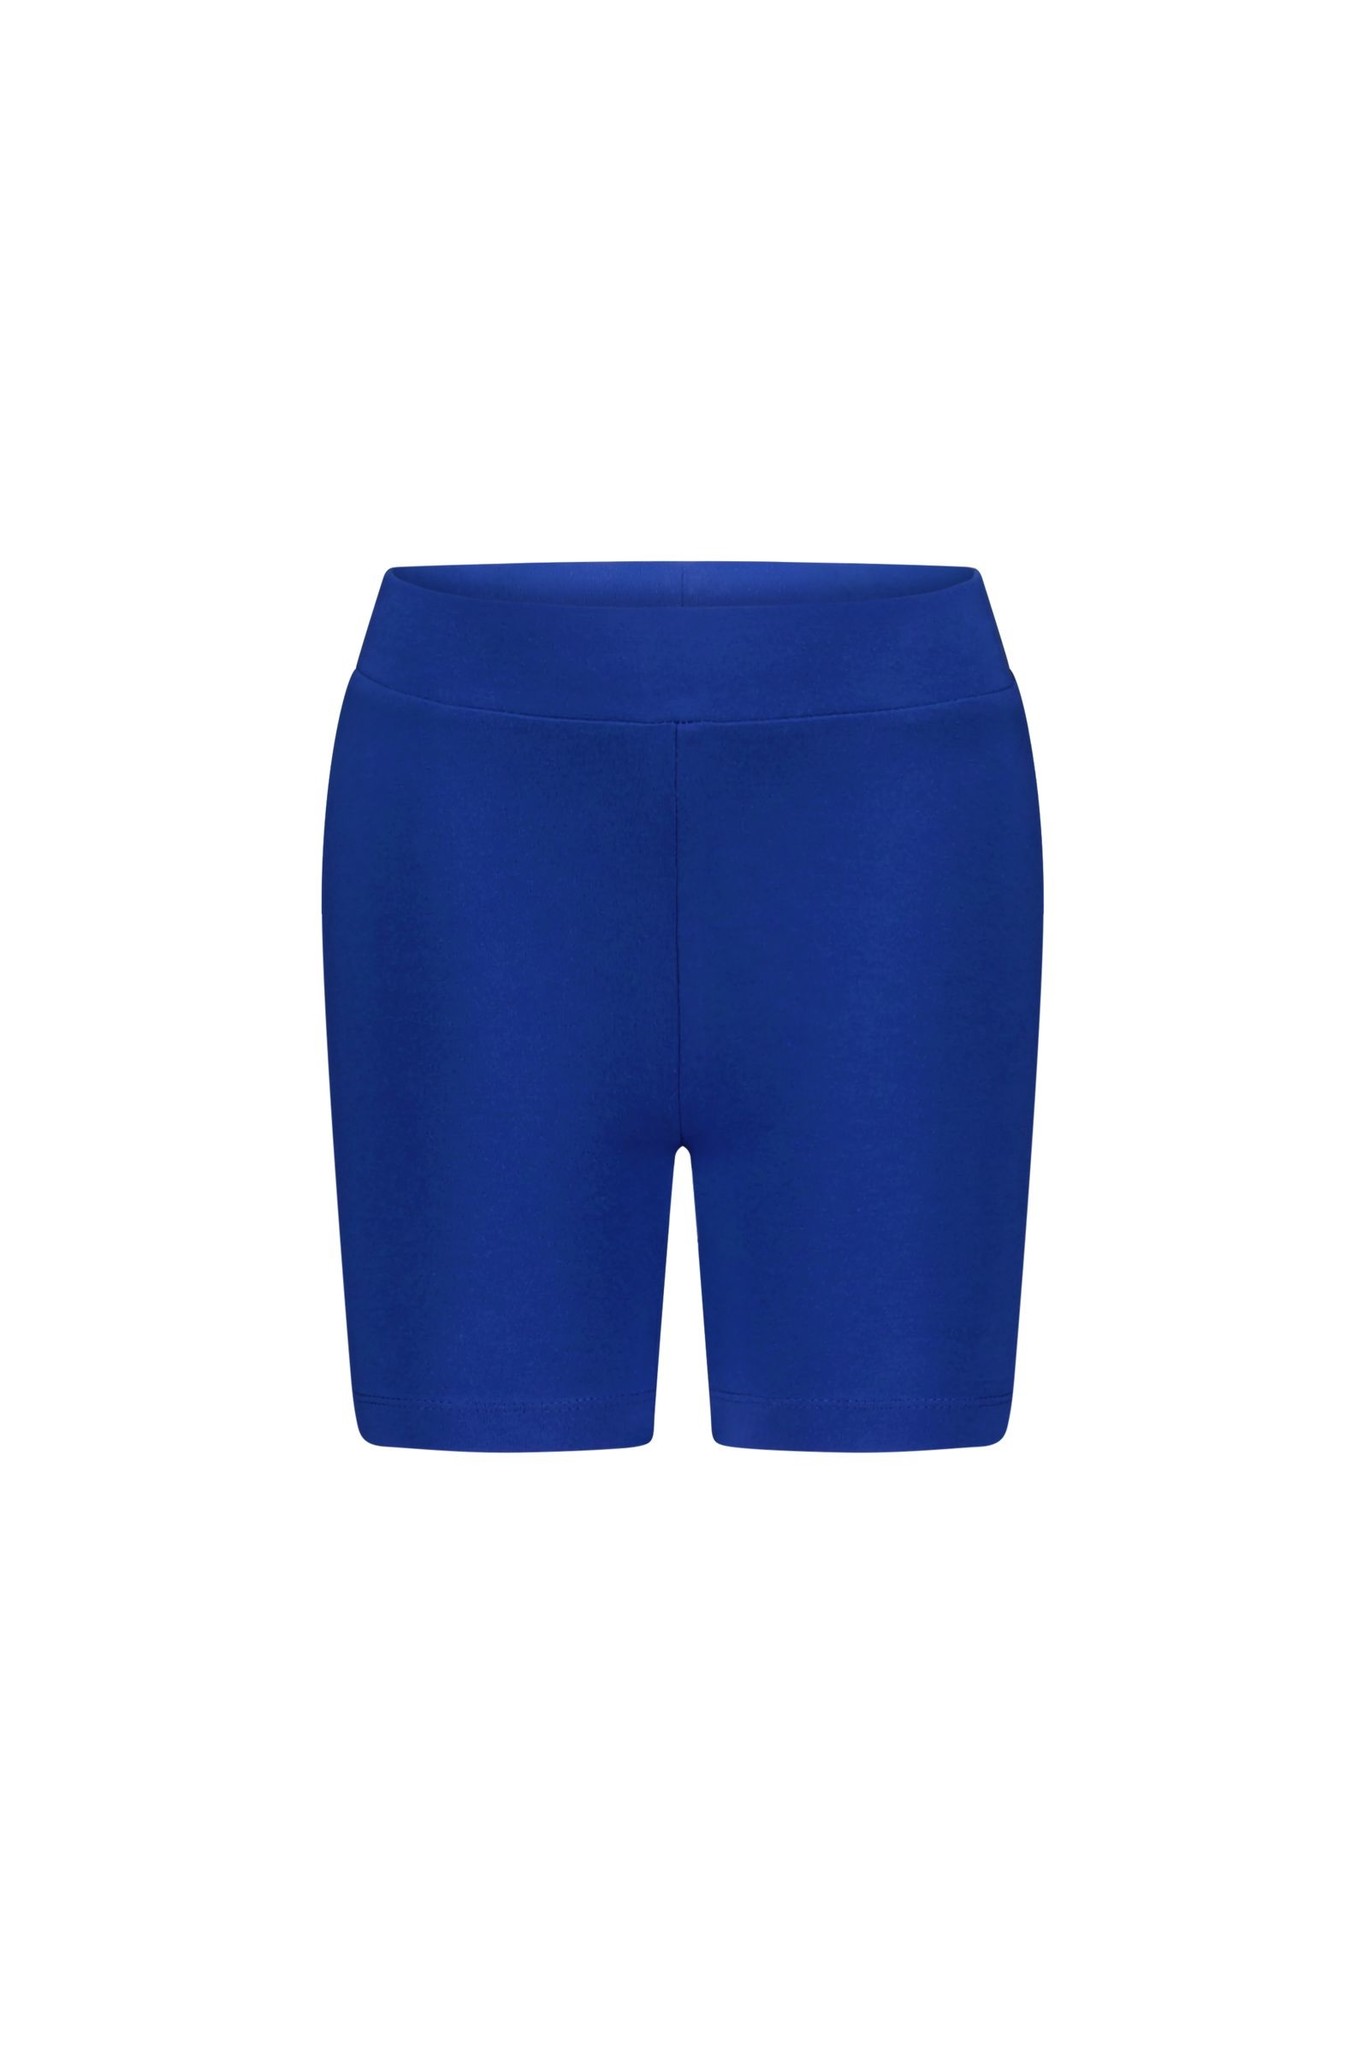 B.Nosy Meisjes short legging uni - Kobalt blauw